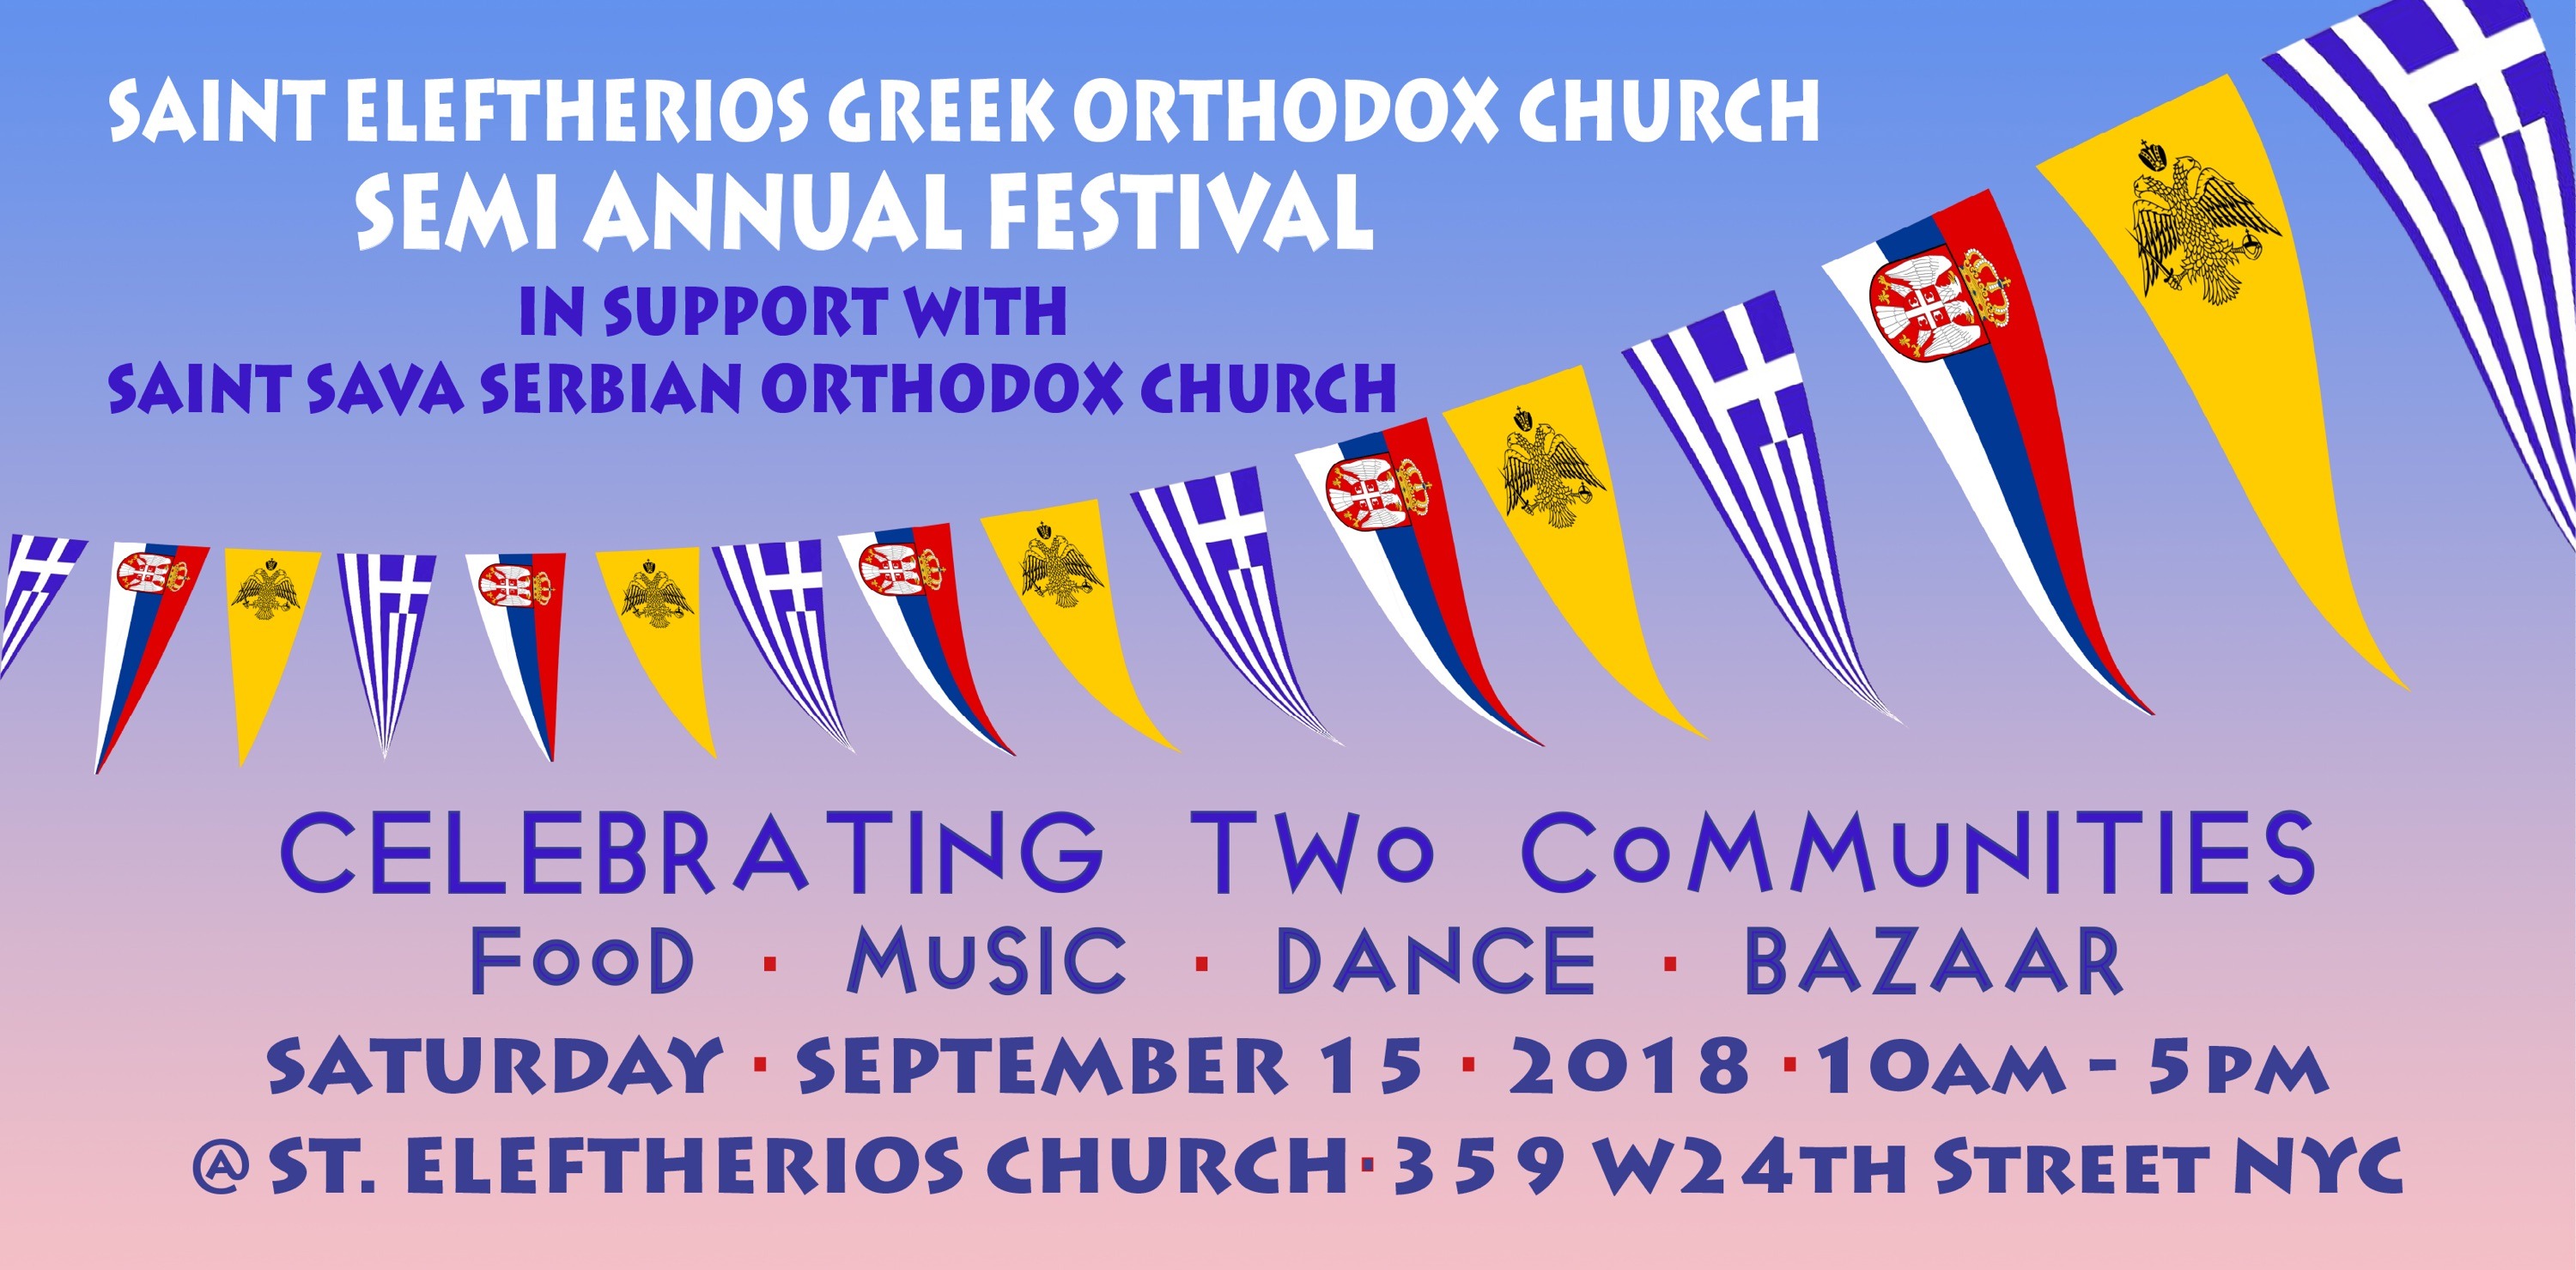 Saint Eleftherios Greek Orthodox Church Semi Annual Festival – Saturday, September 15, 2018